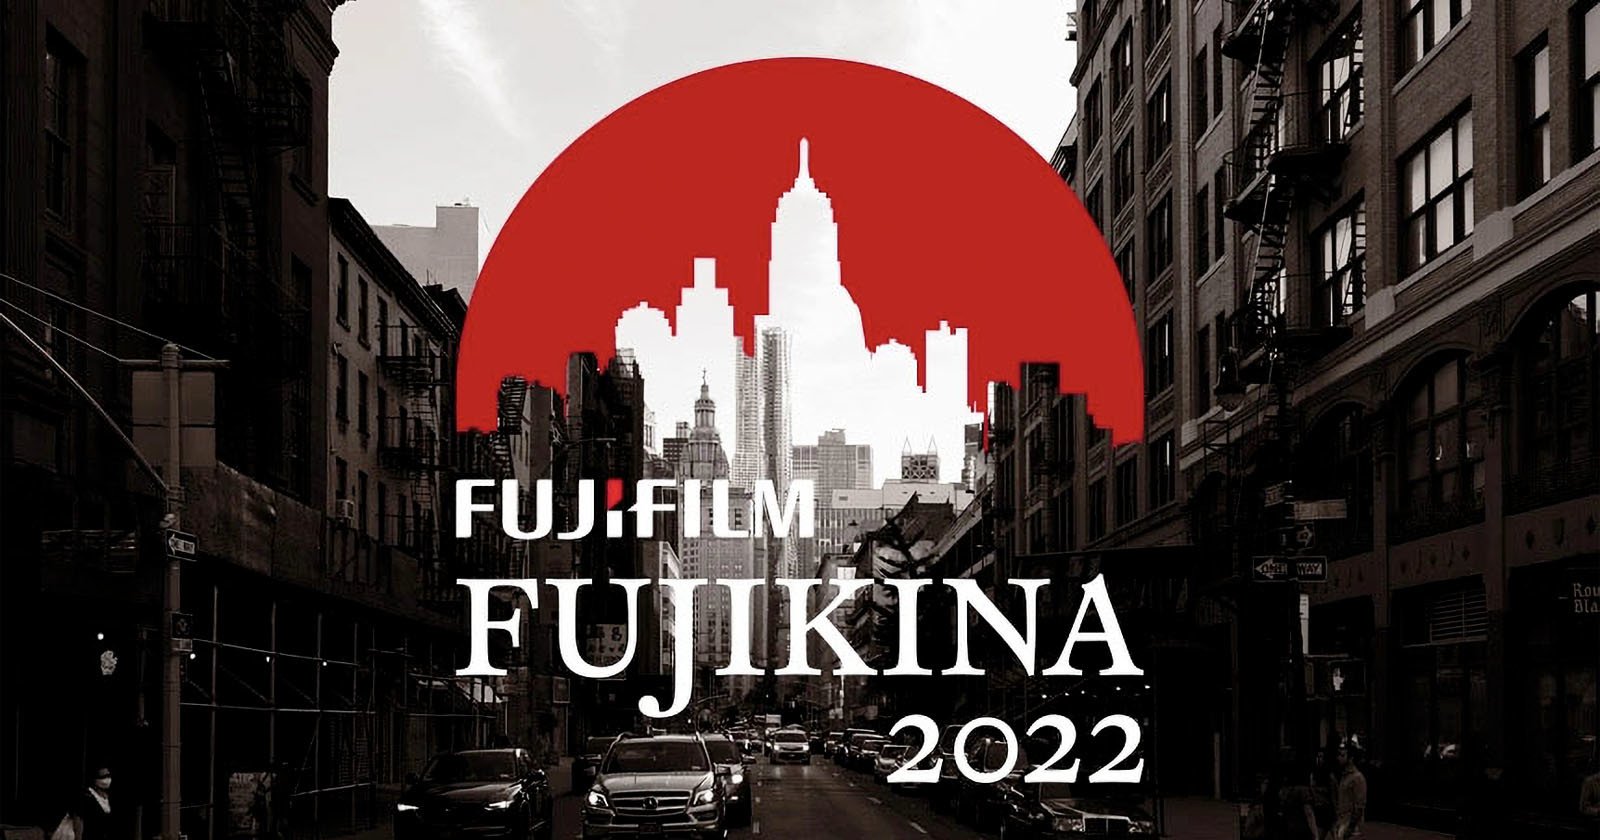  fujifilm host fujikina photo festival york 